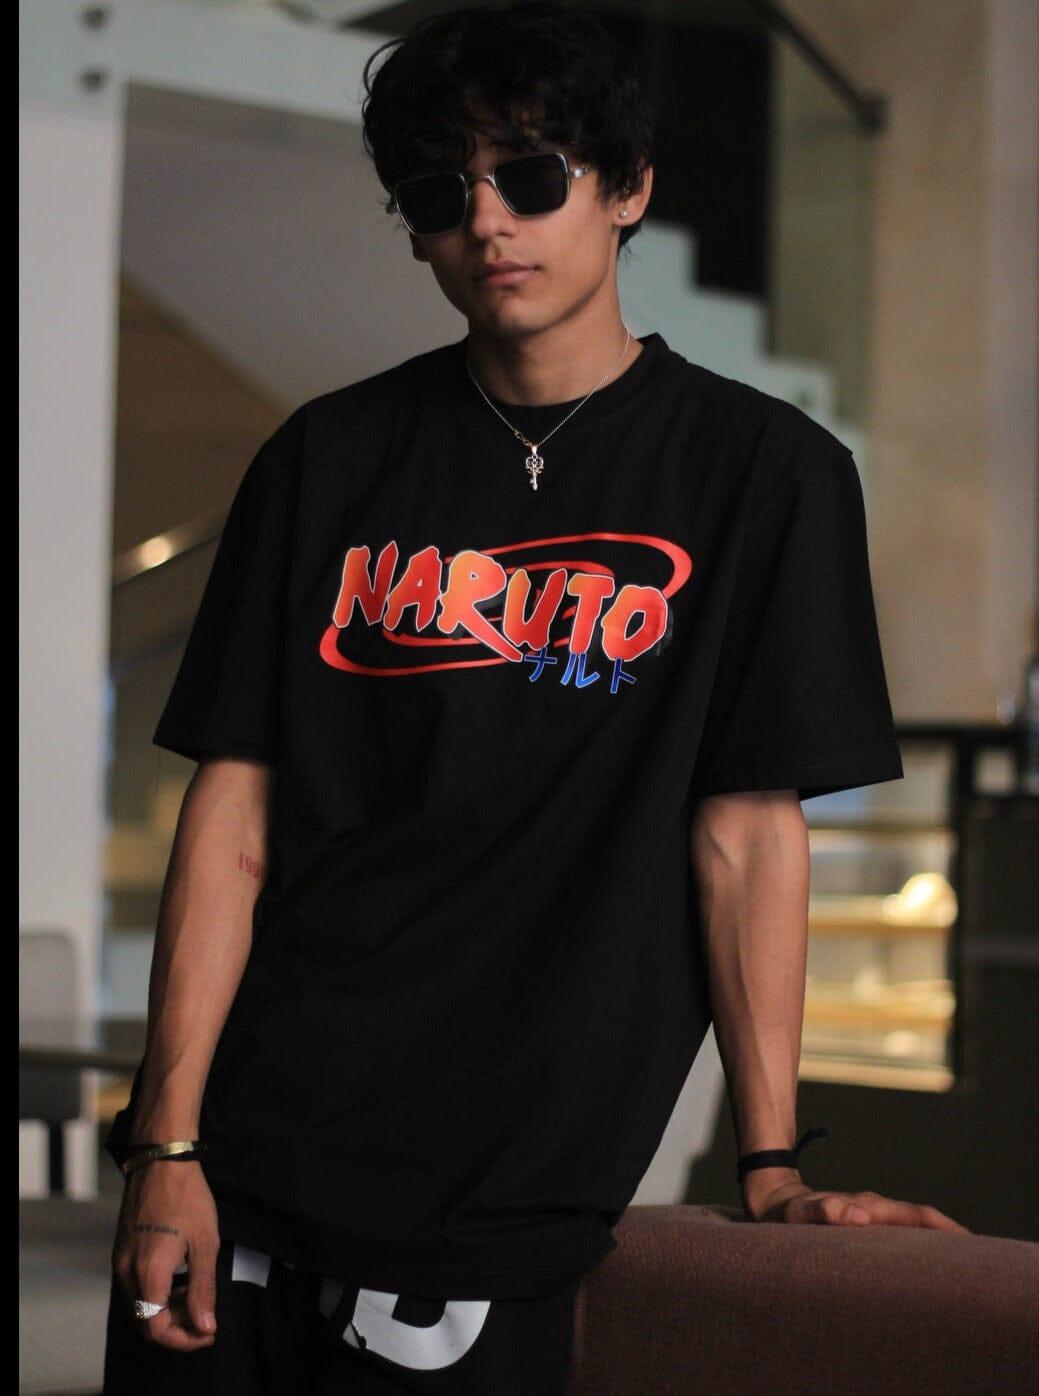 Naruto Tee (T-shirt) For Men T-shirt Burger Bae 